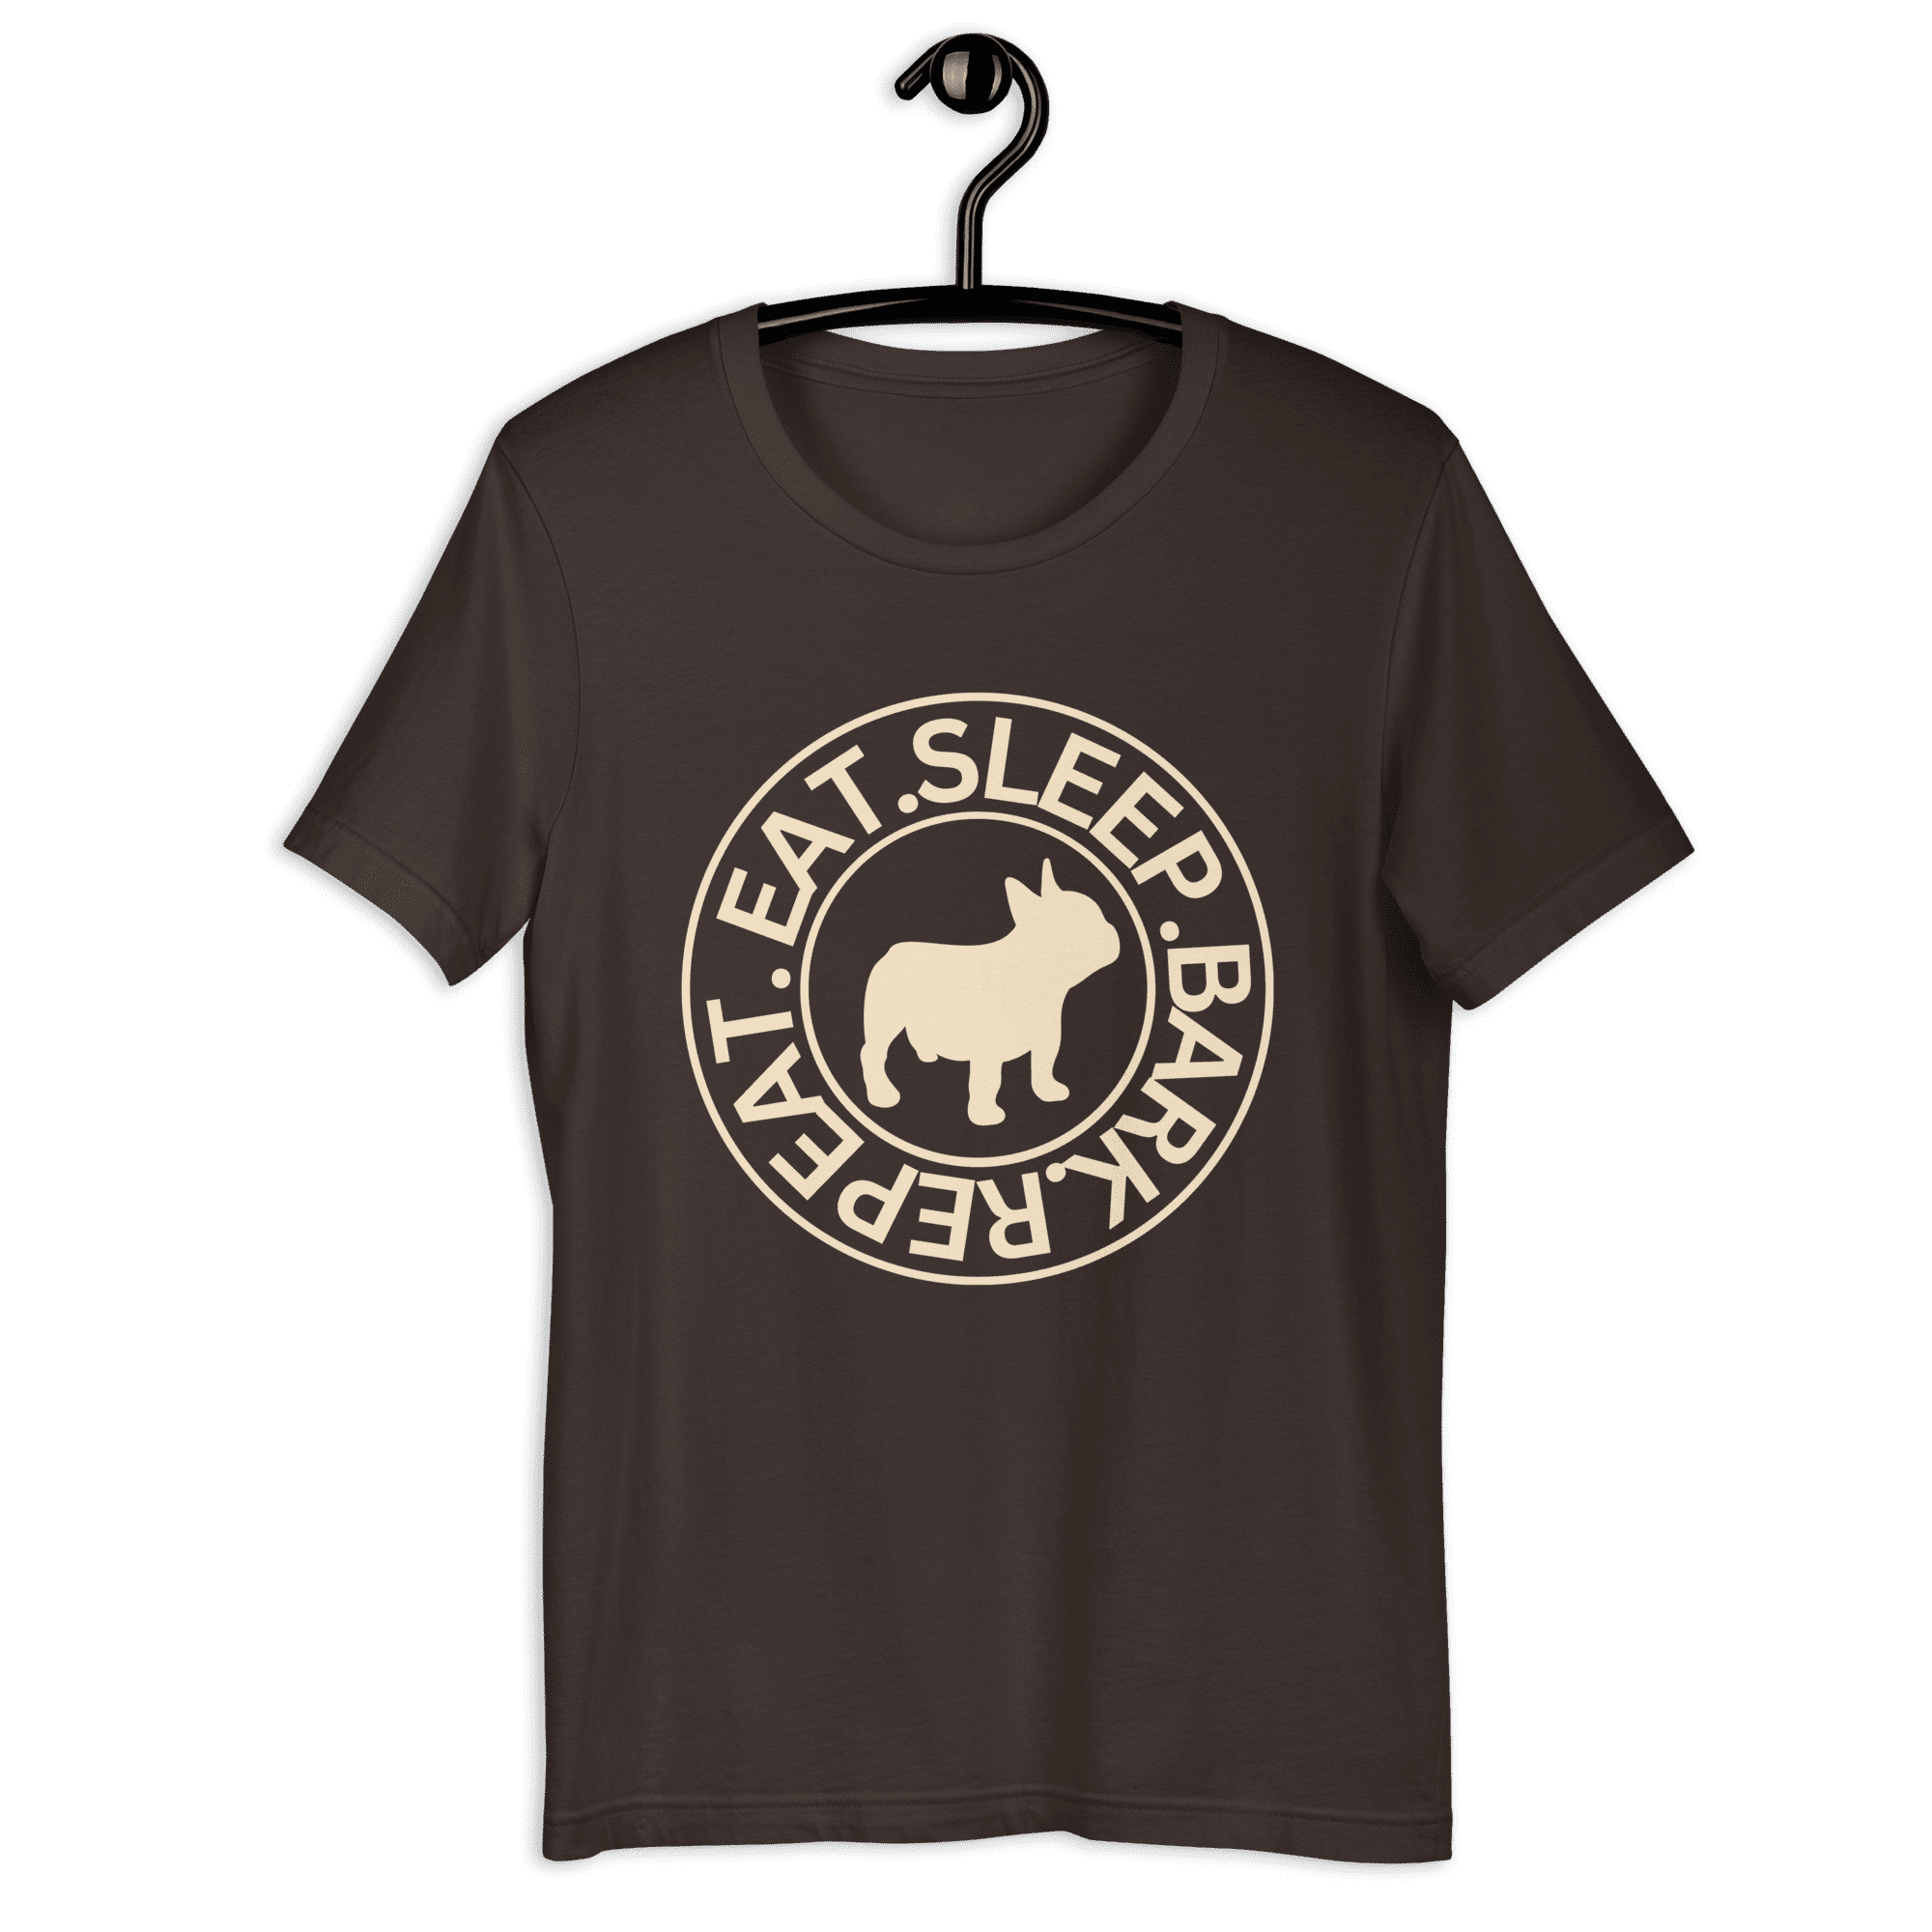 The "Eat Sleep Bark Repeat" French Bulldog Unisex T-Shirt. Brown